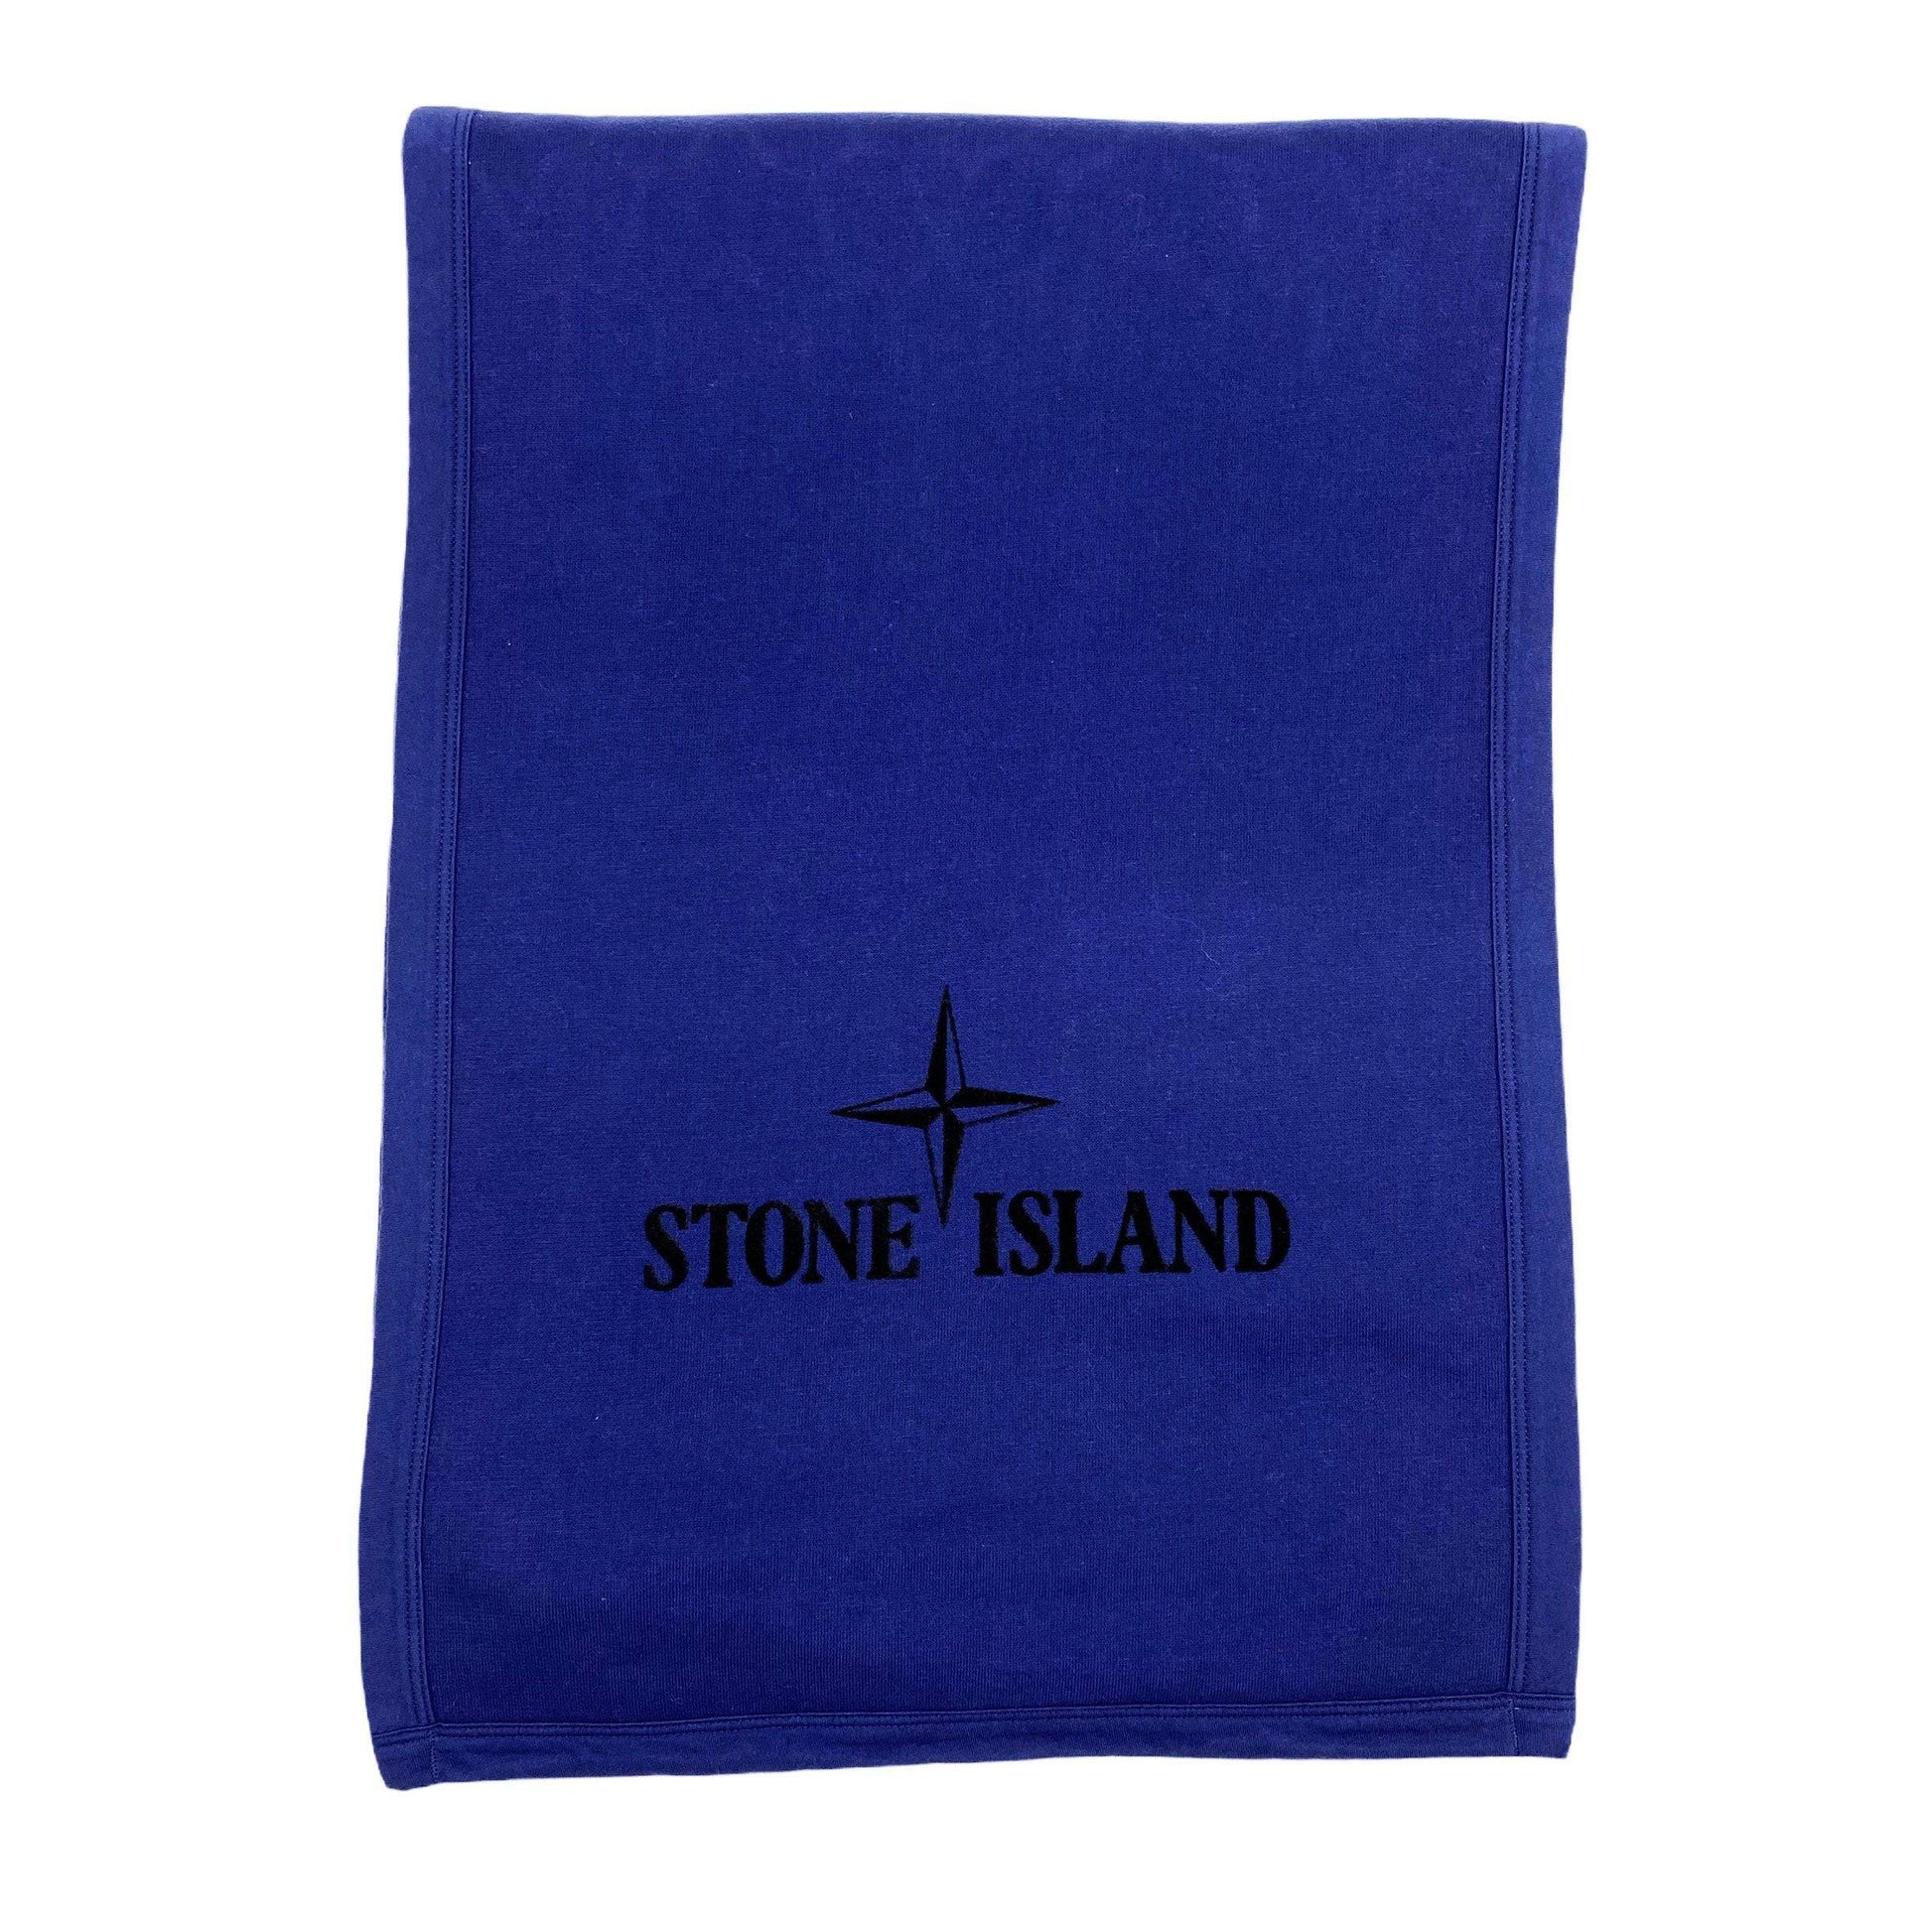 Stone Island Purple Scarf - DANYOUNGUK